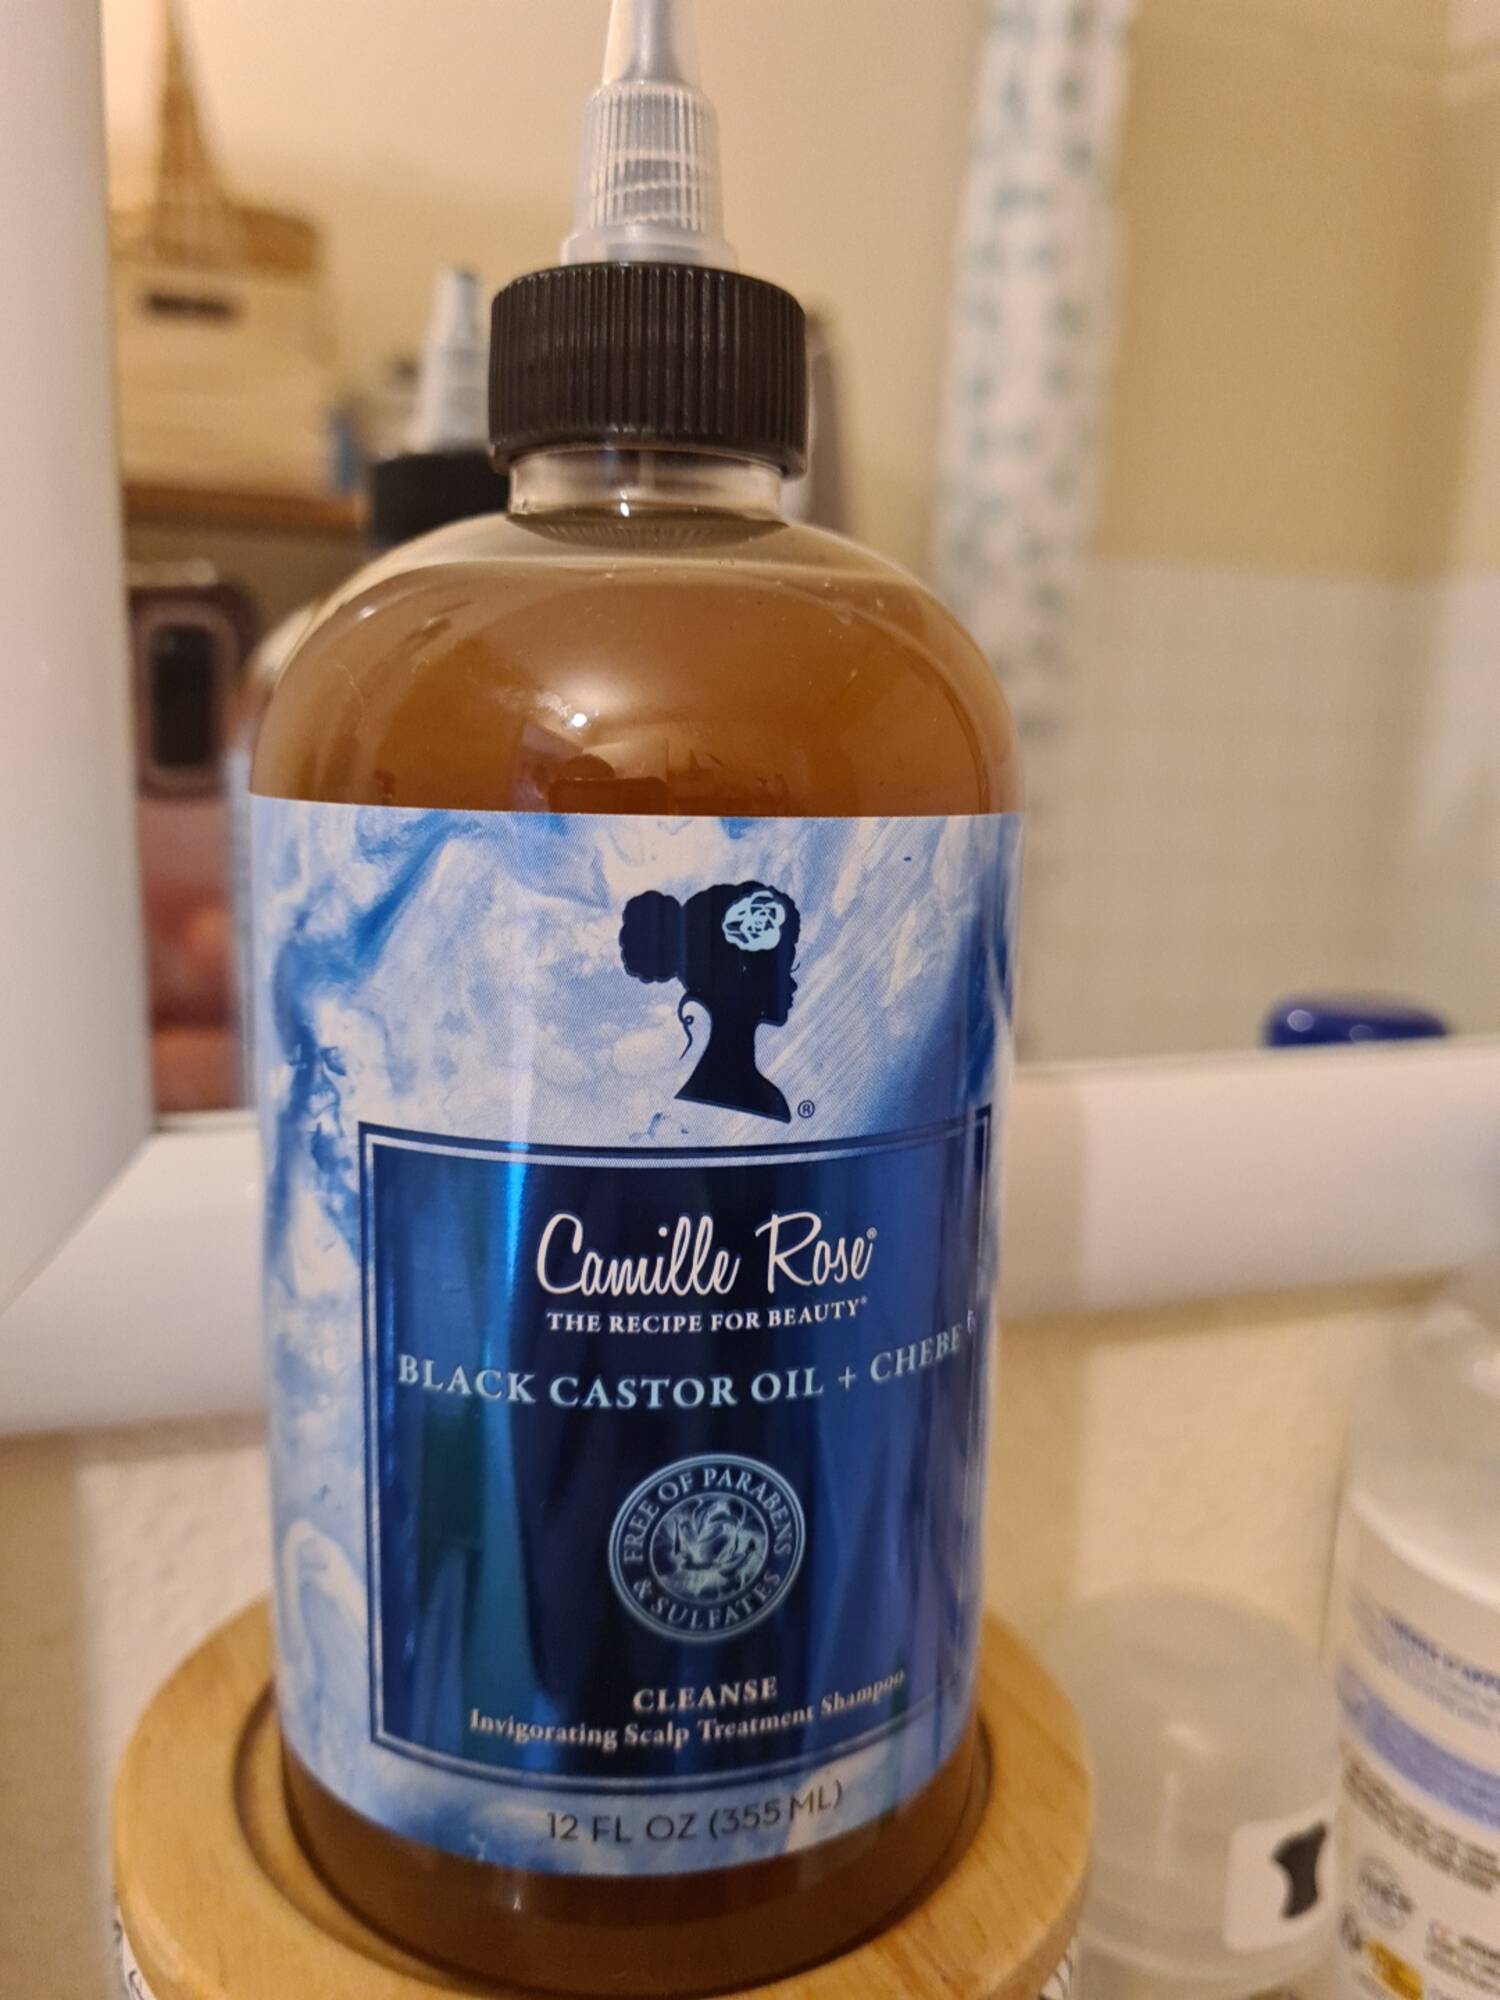 CAMILLE ROSE - Black castor oil + chebe - Shampoo